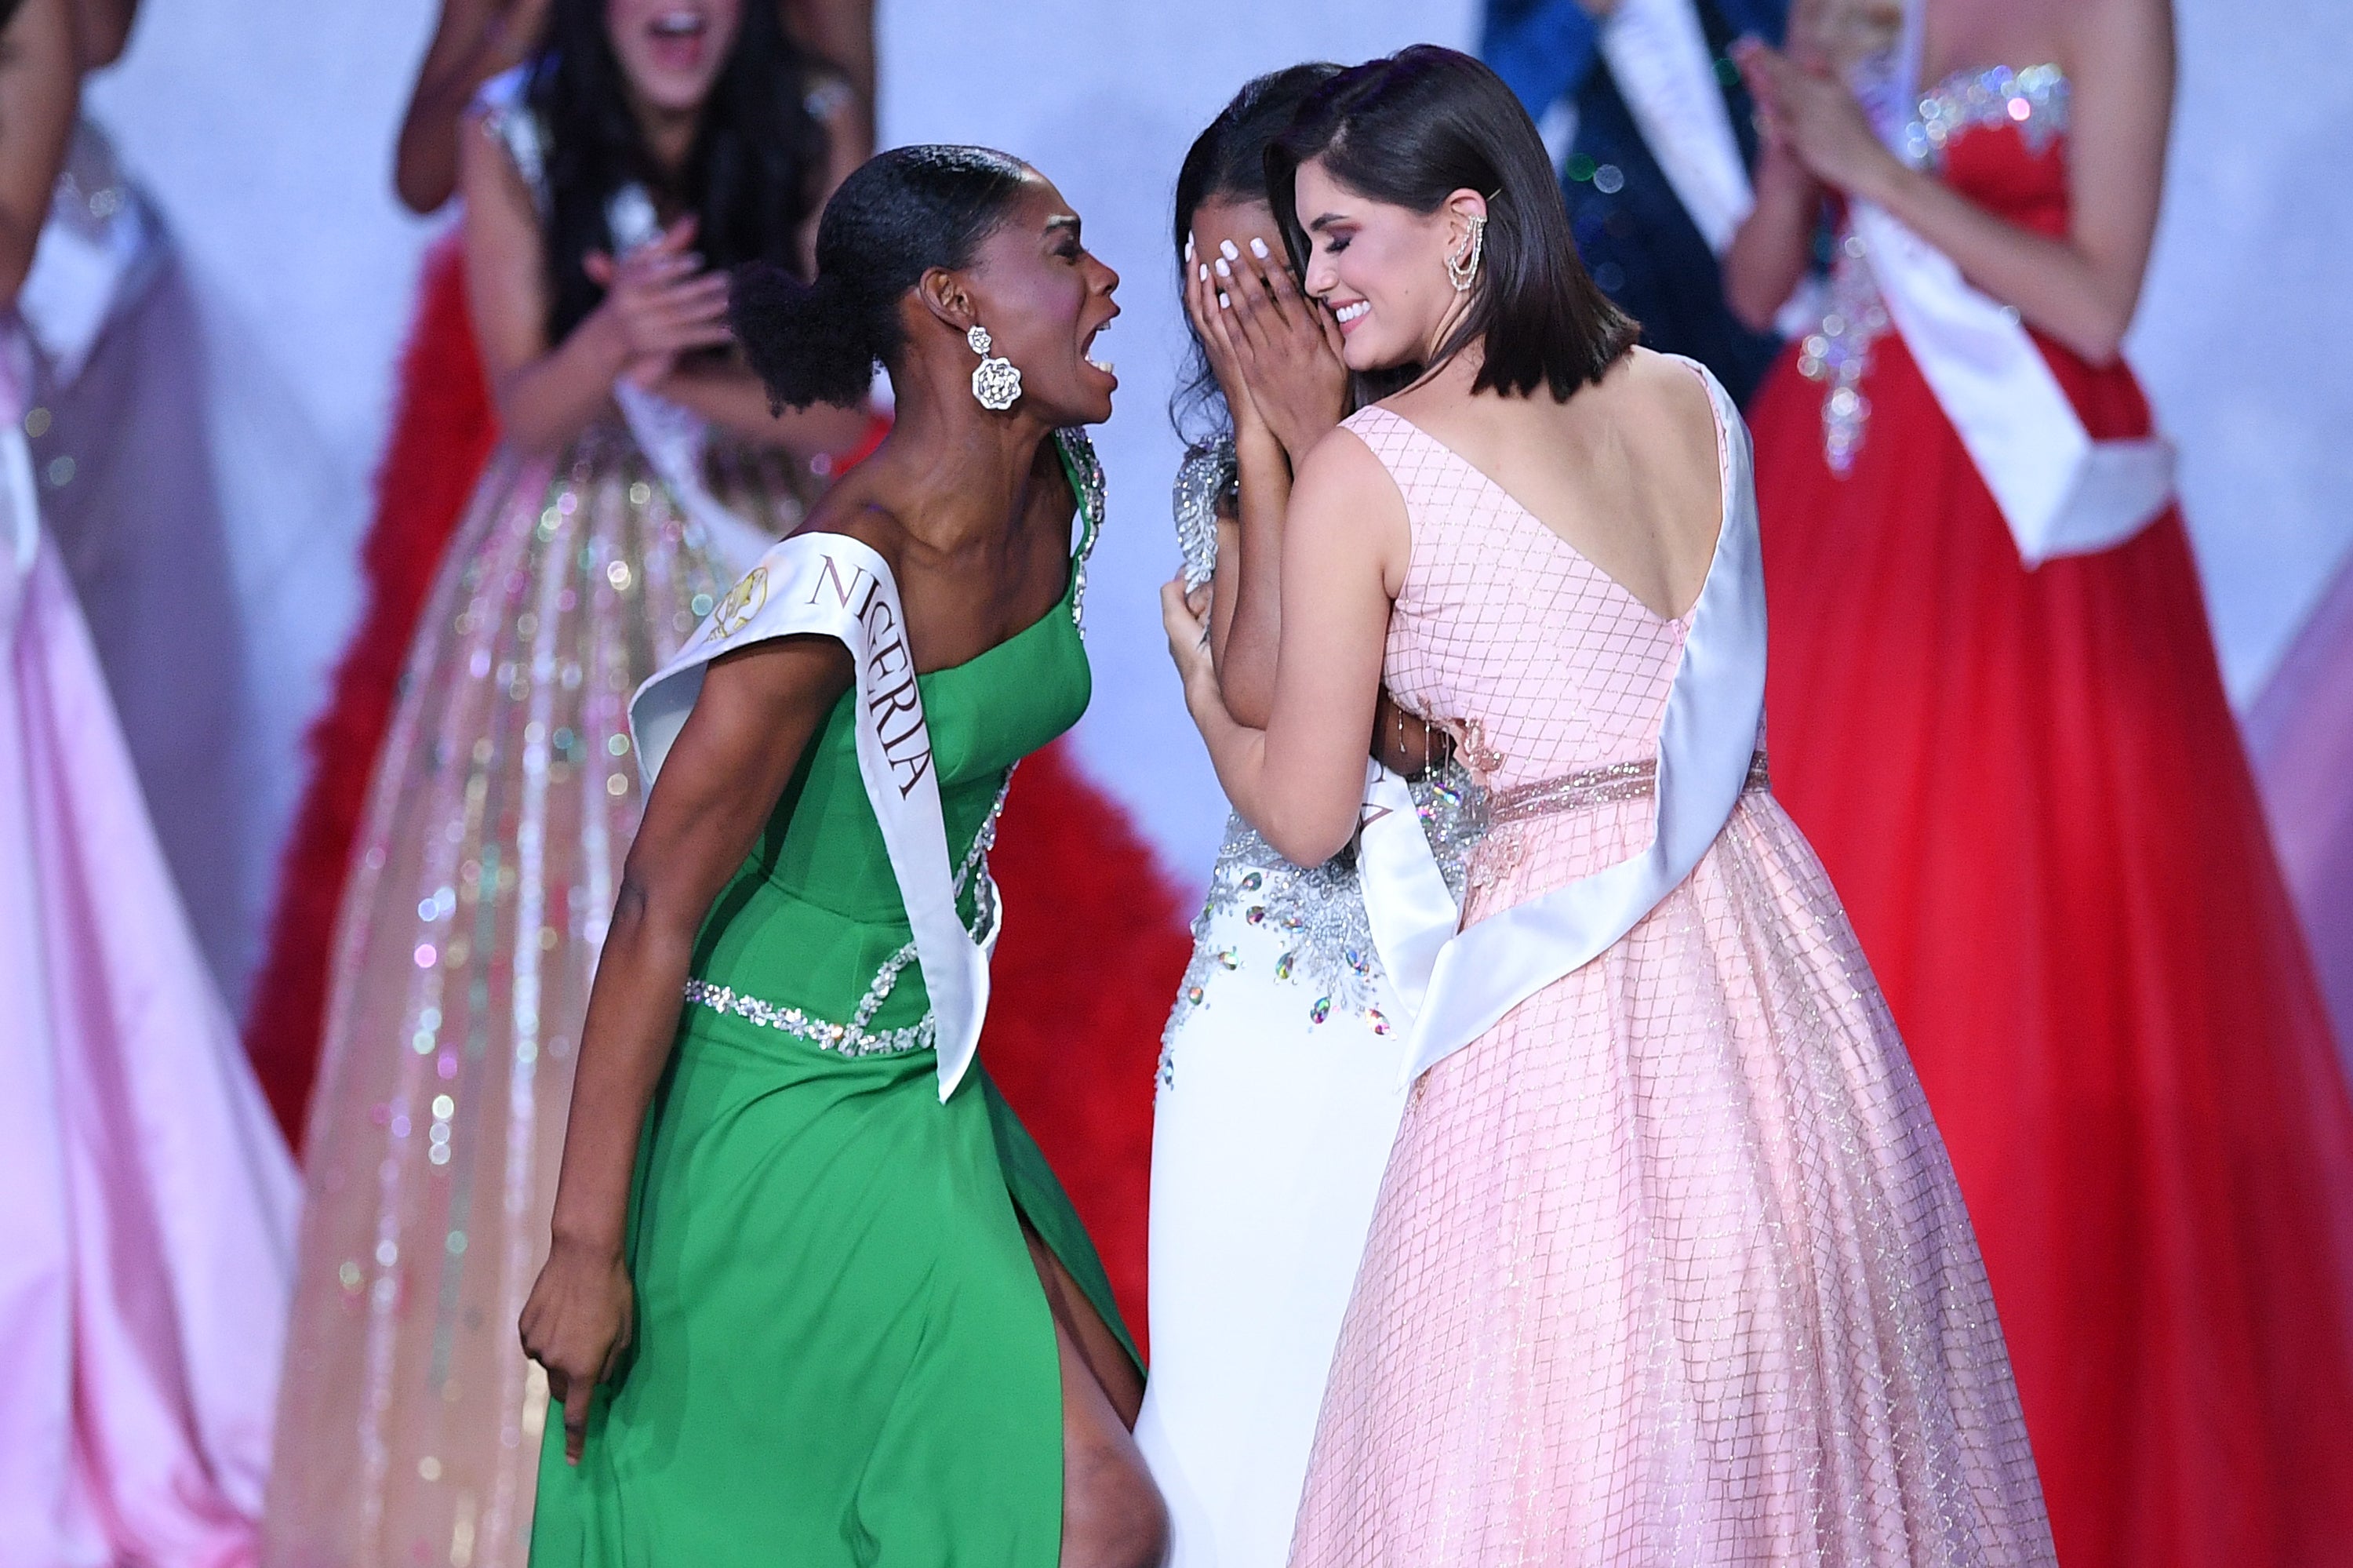 Miss Nigeria's Praise Dance For Fellow Contestant's Win Is Friendship Goals